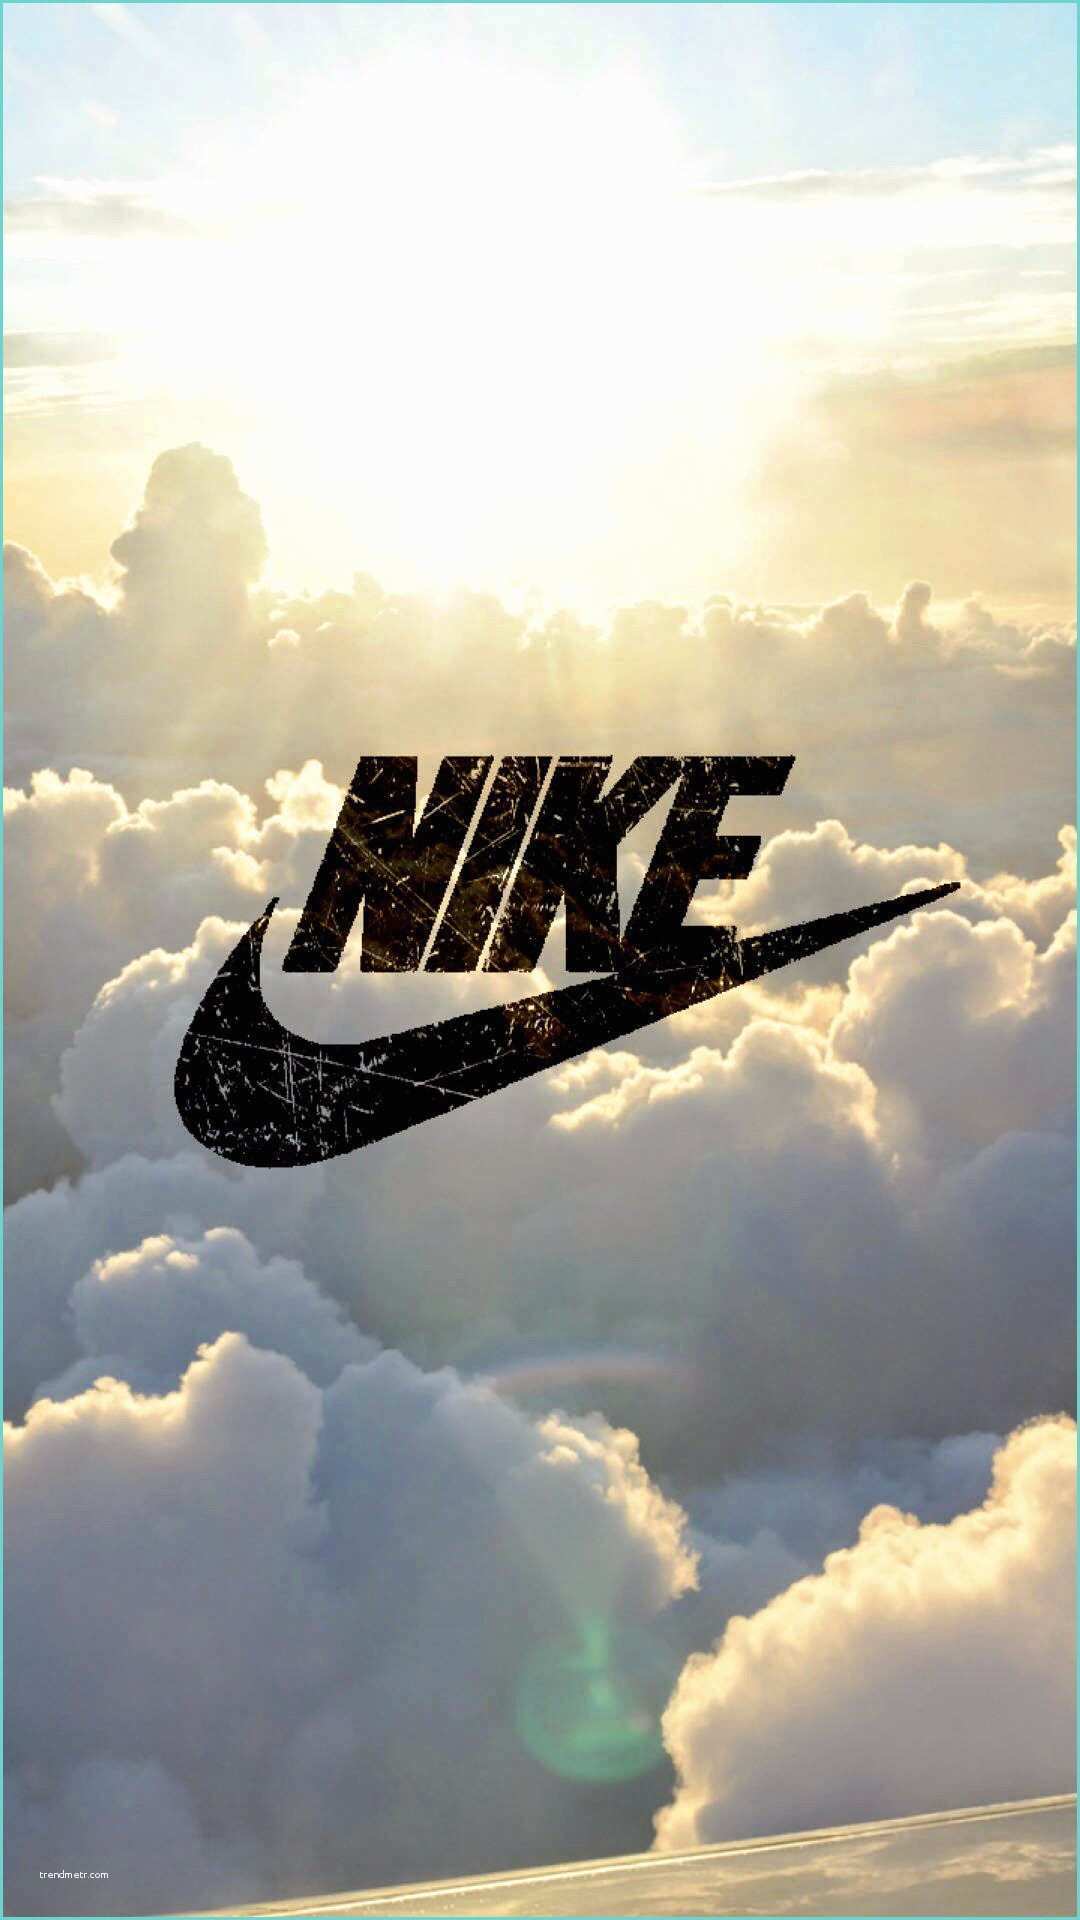 Fond Dcran De Nike Fond Ecran Nike Ides Avec Fond Ecran Pinterest Idees Et